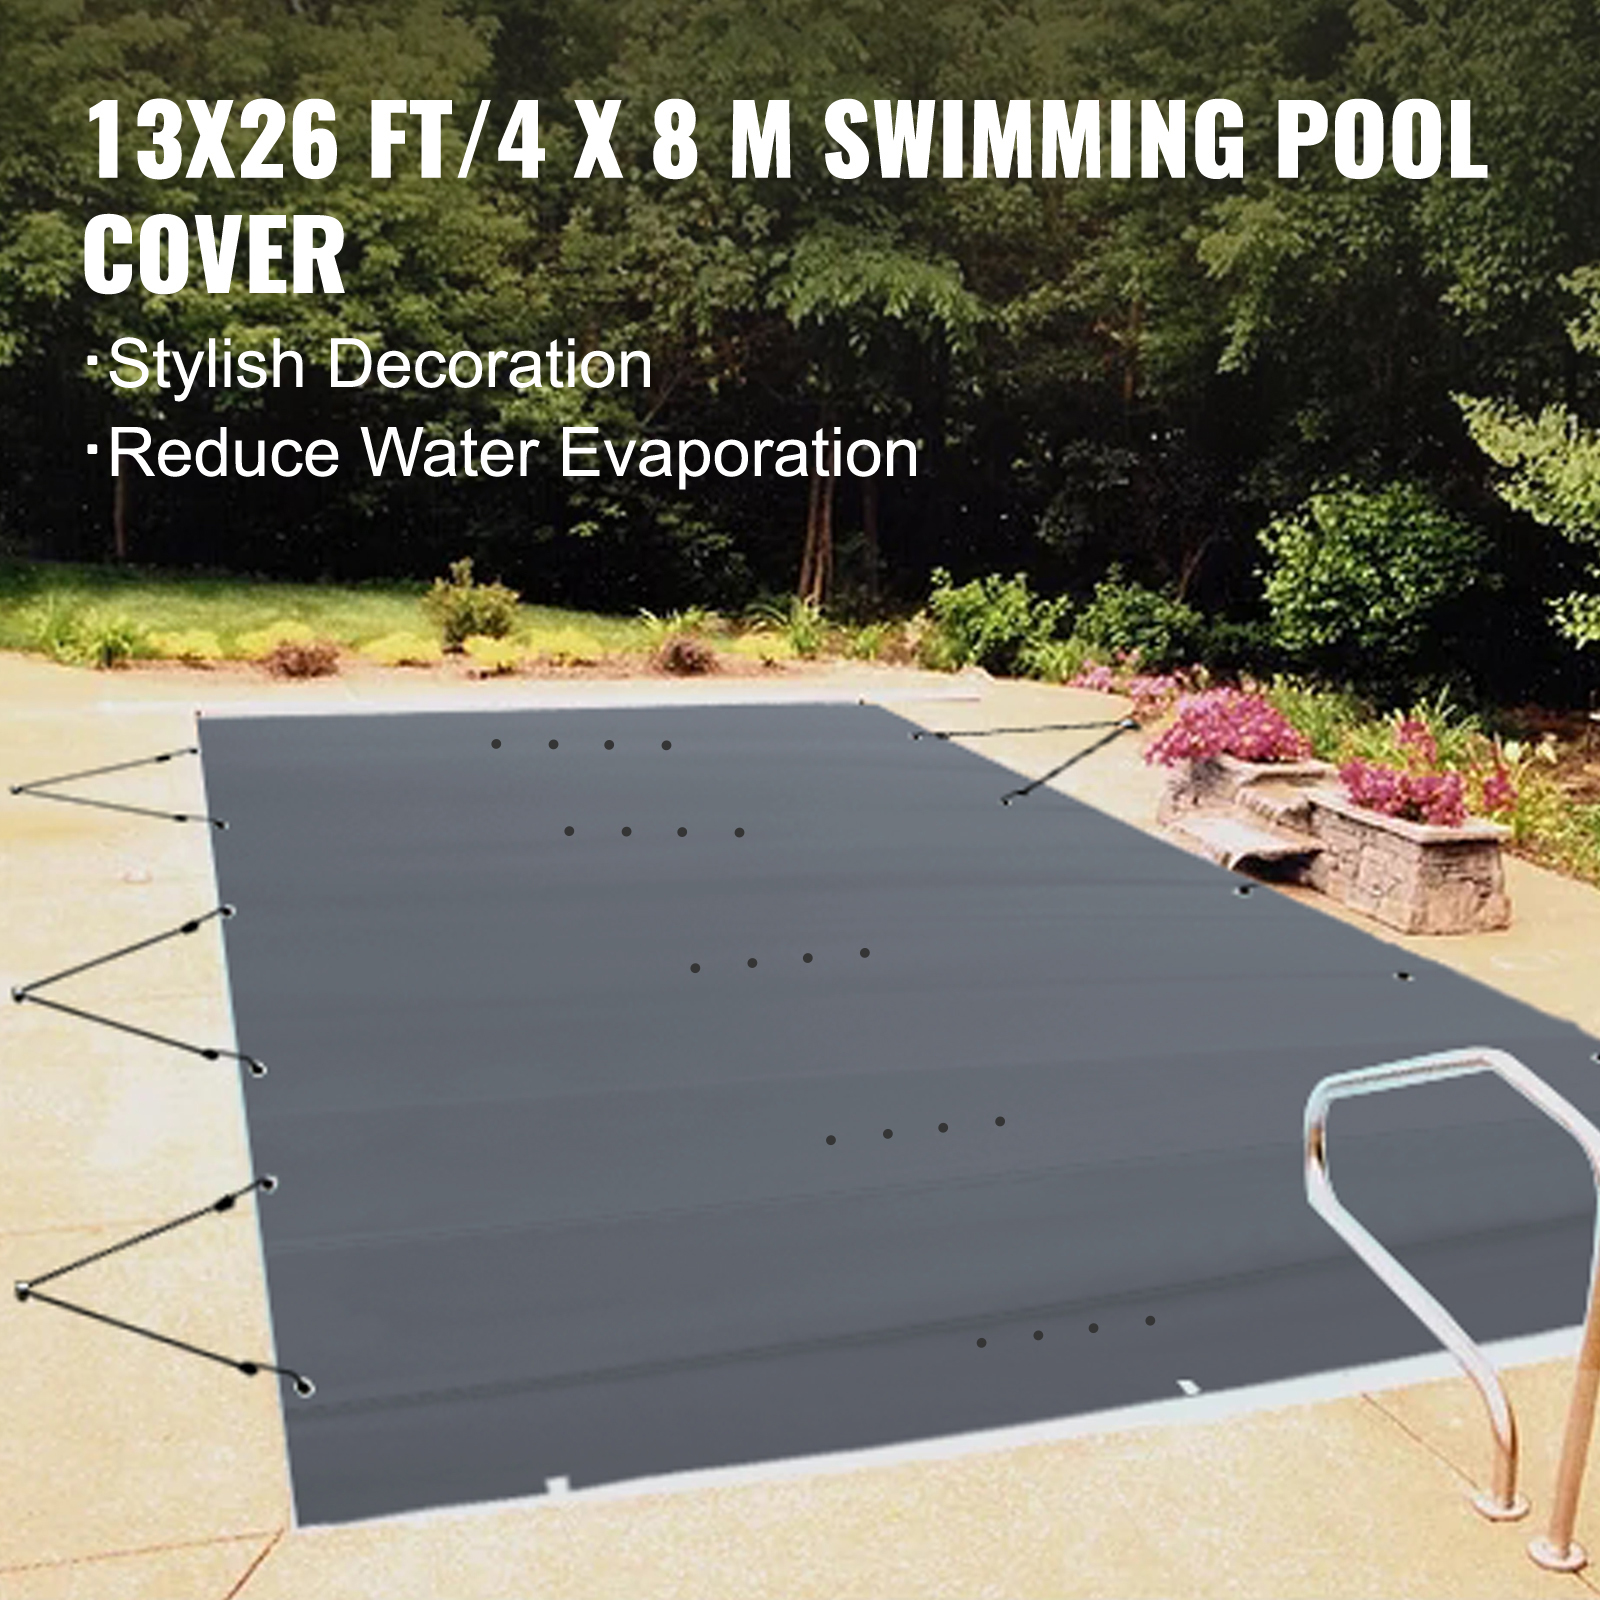 VEVOR VEVOR Pool Safety Cover, 13x26 ft In-ground Pool Cover